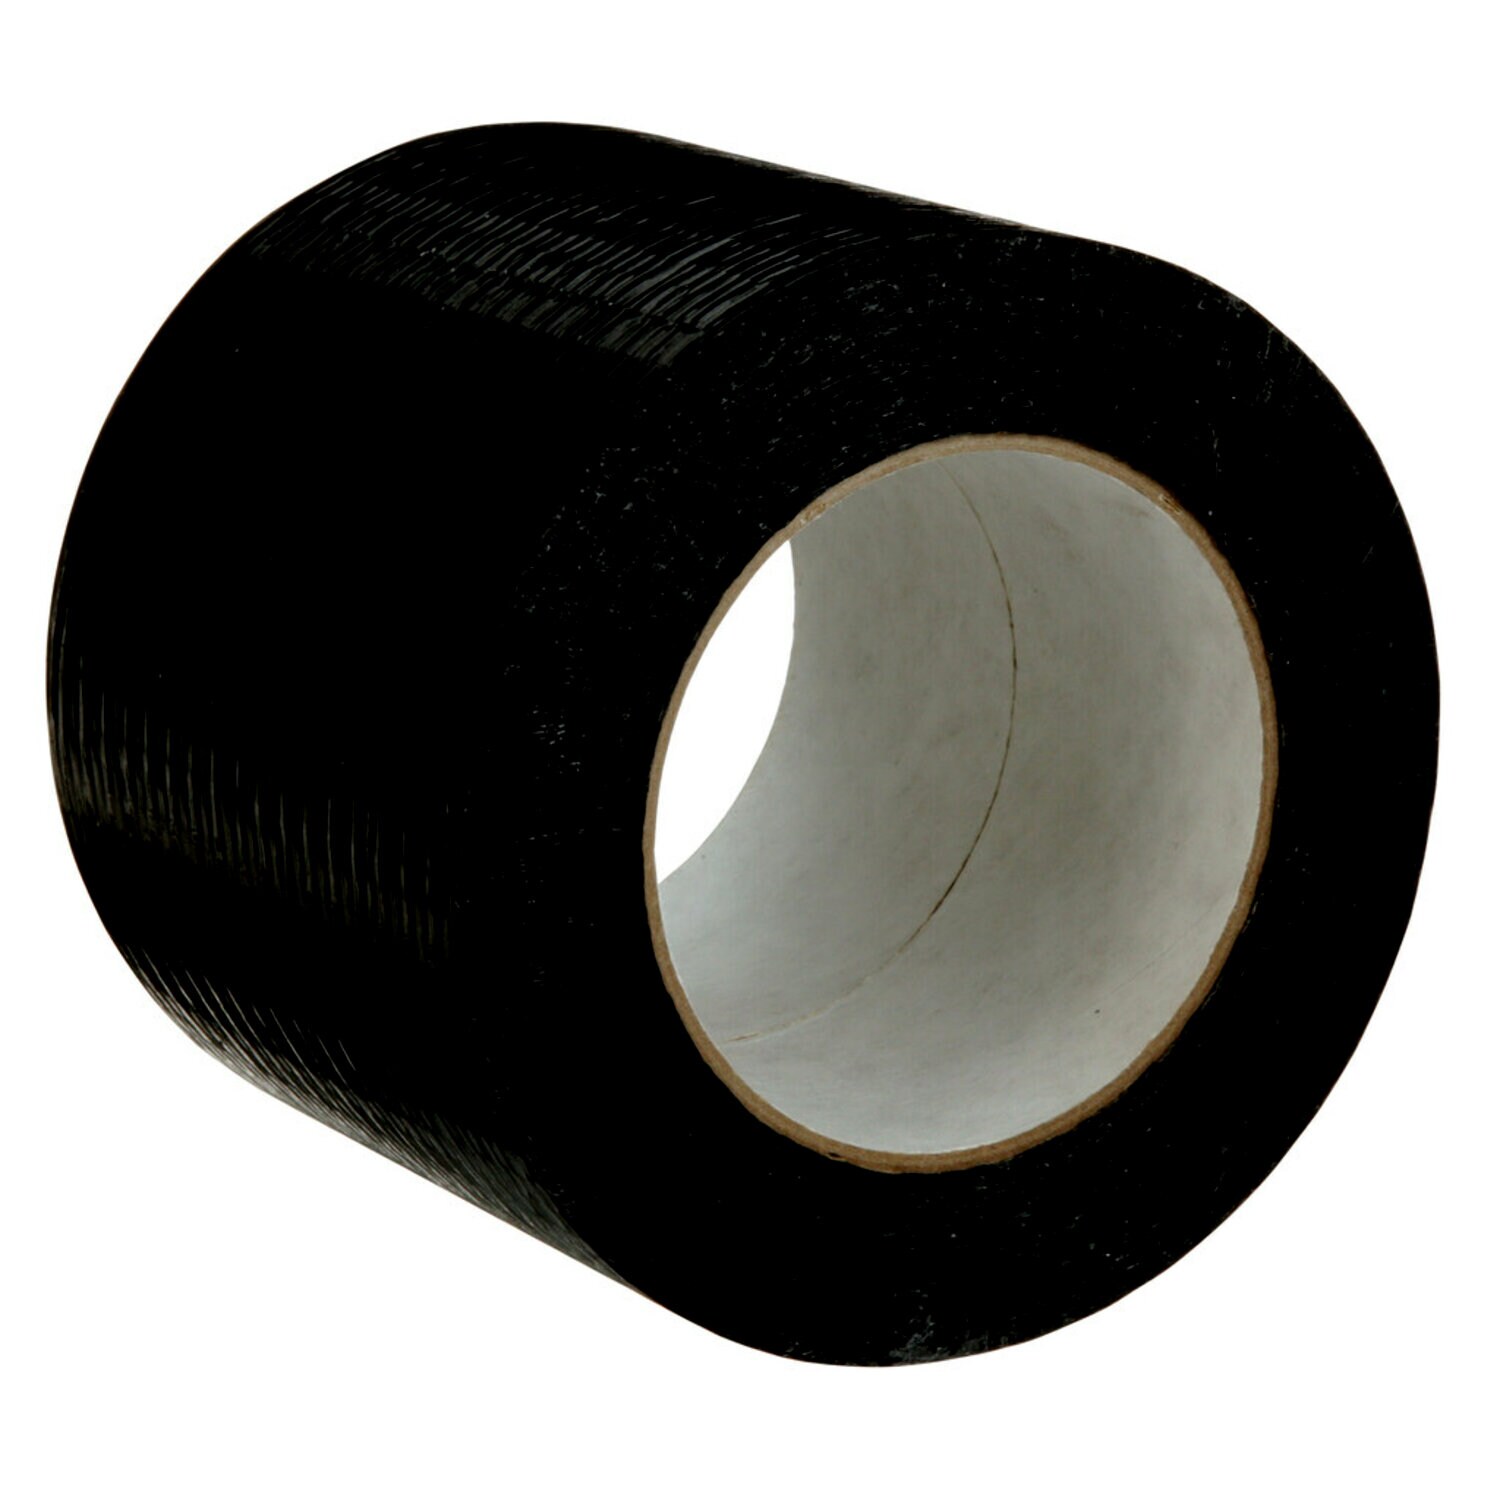 7100043941 - 3M Woven Patch Tape 442B, Black, 99 mm x 50 m, 15 Rolls/Case